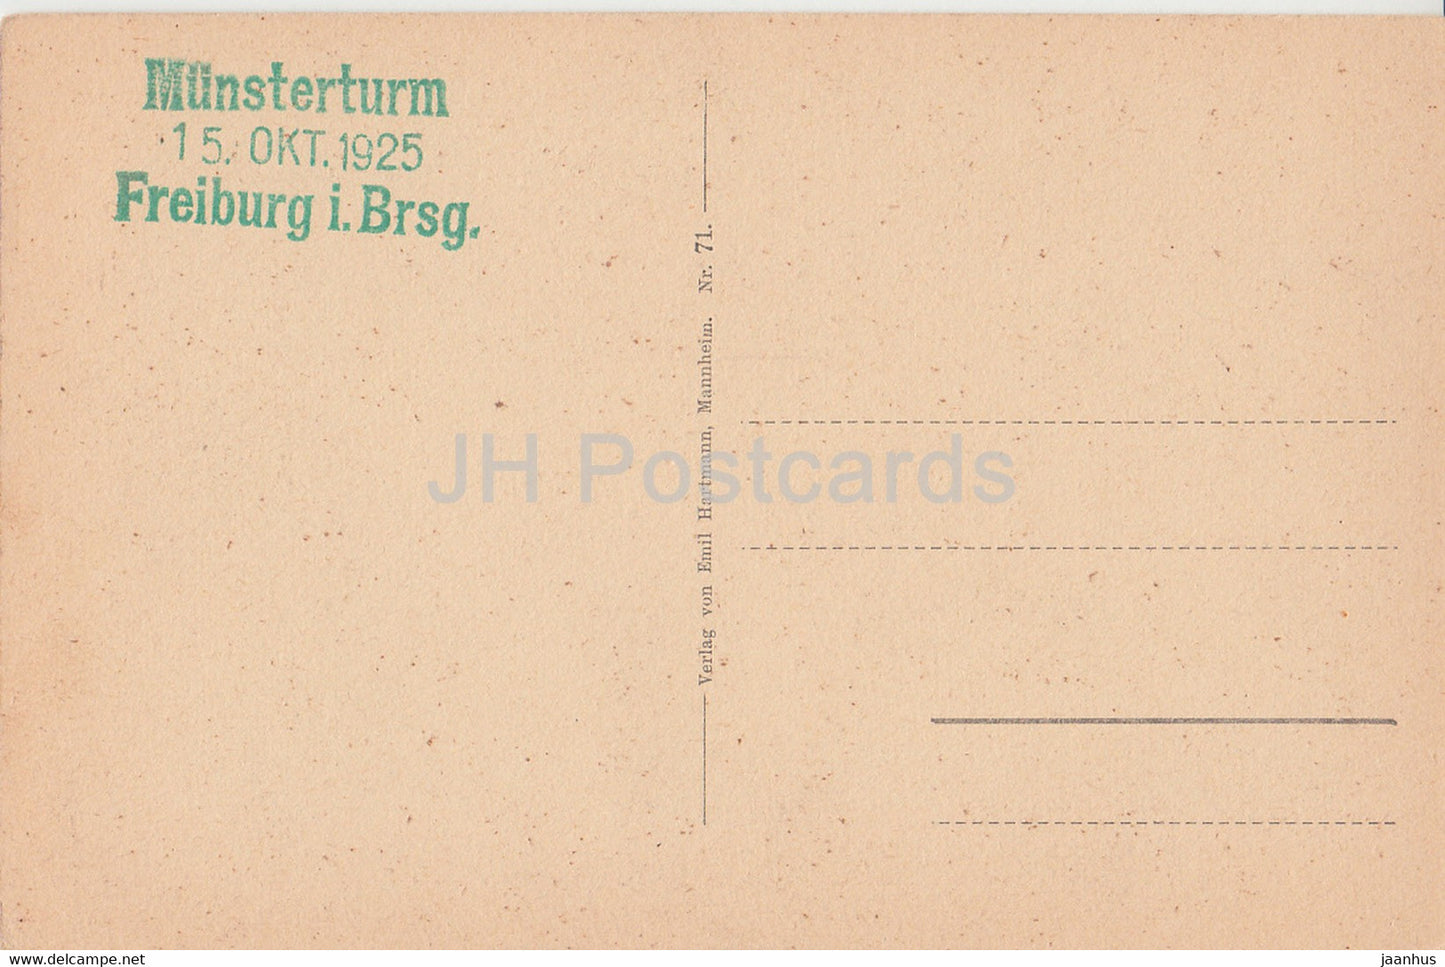 Freiburg i B - Das Munster - cathedral - 1925 - old postcard - Germany - unused